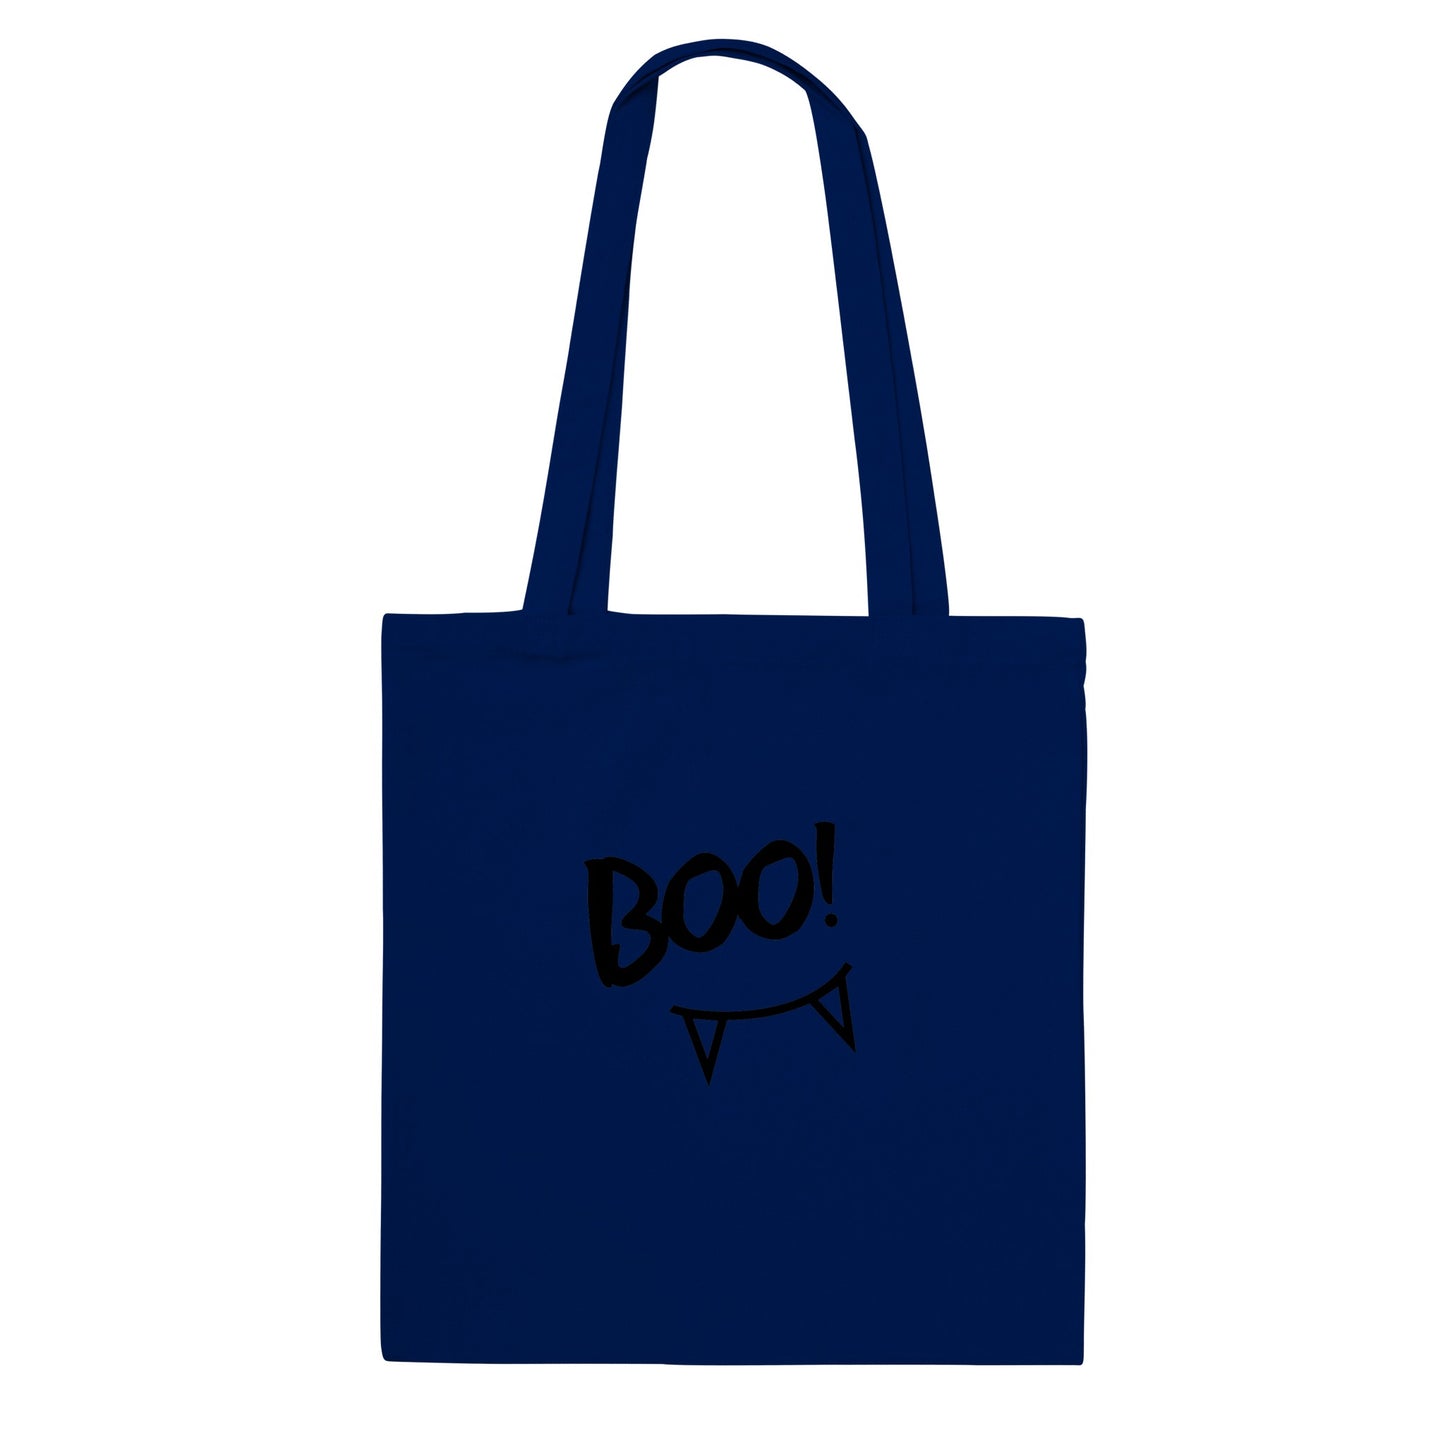 Boo! - Classic Tote Bag